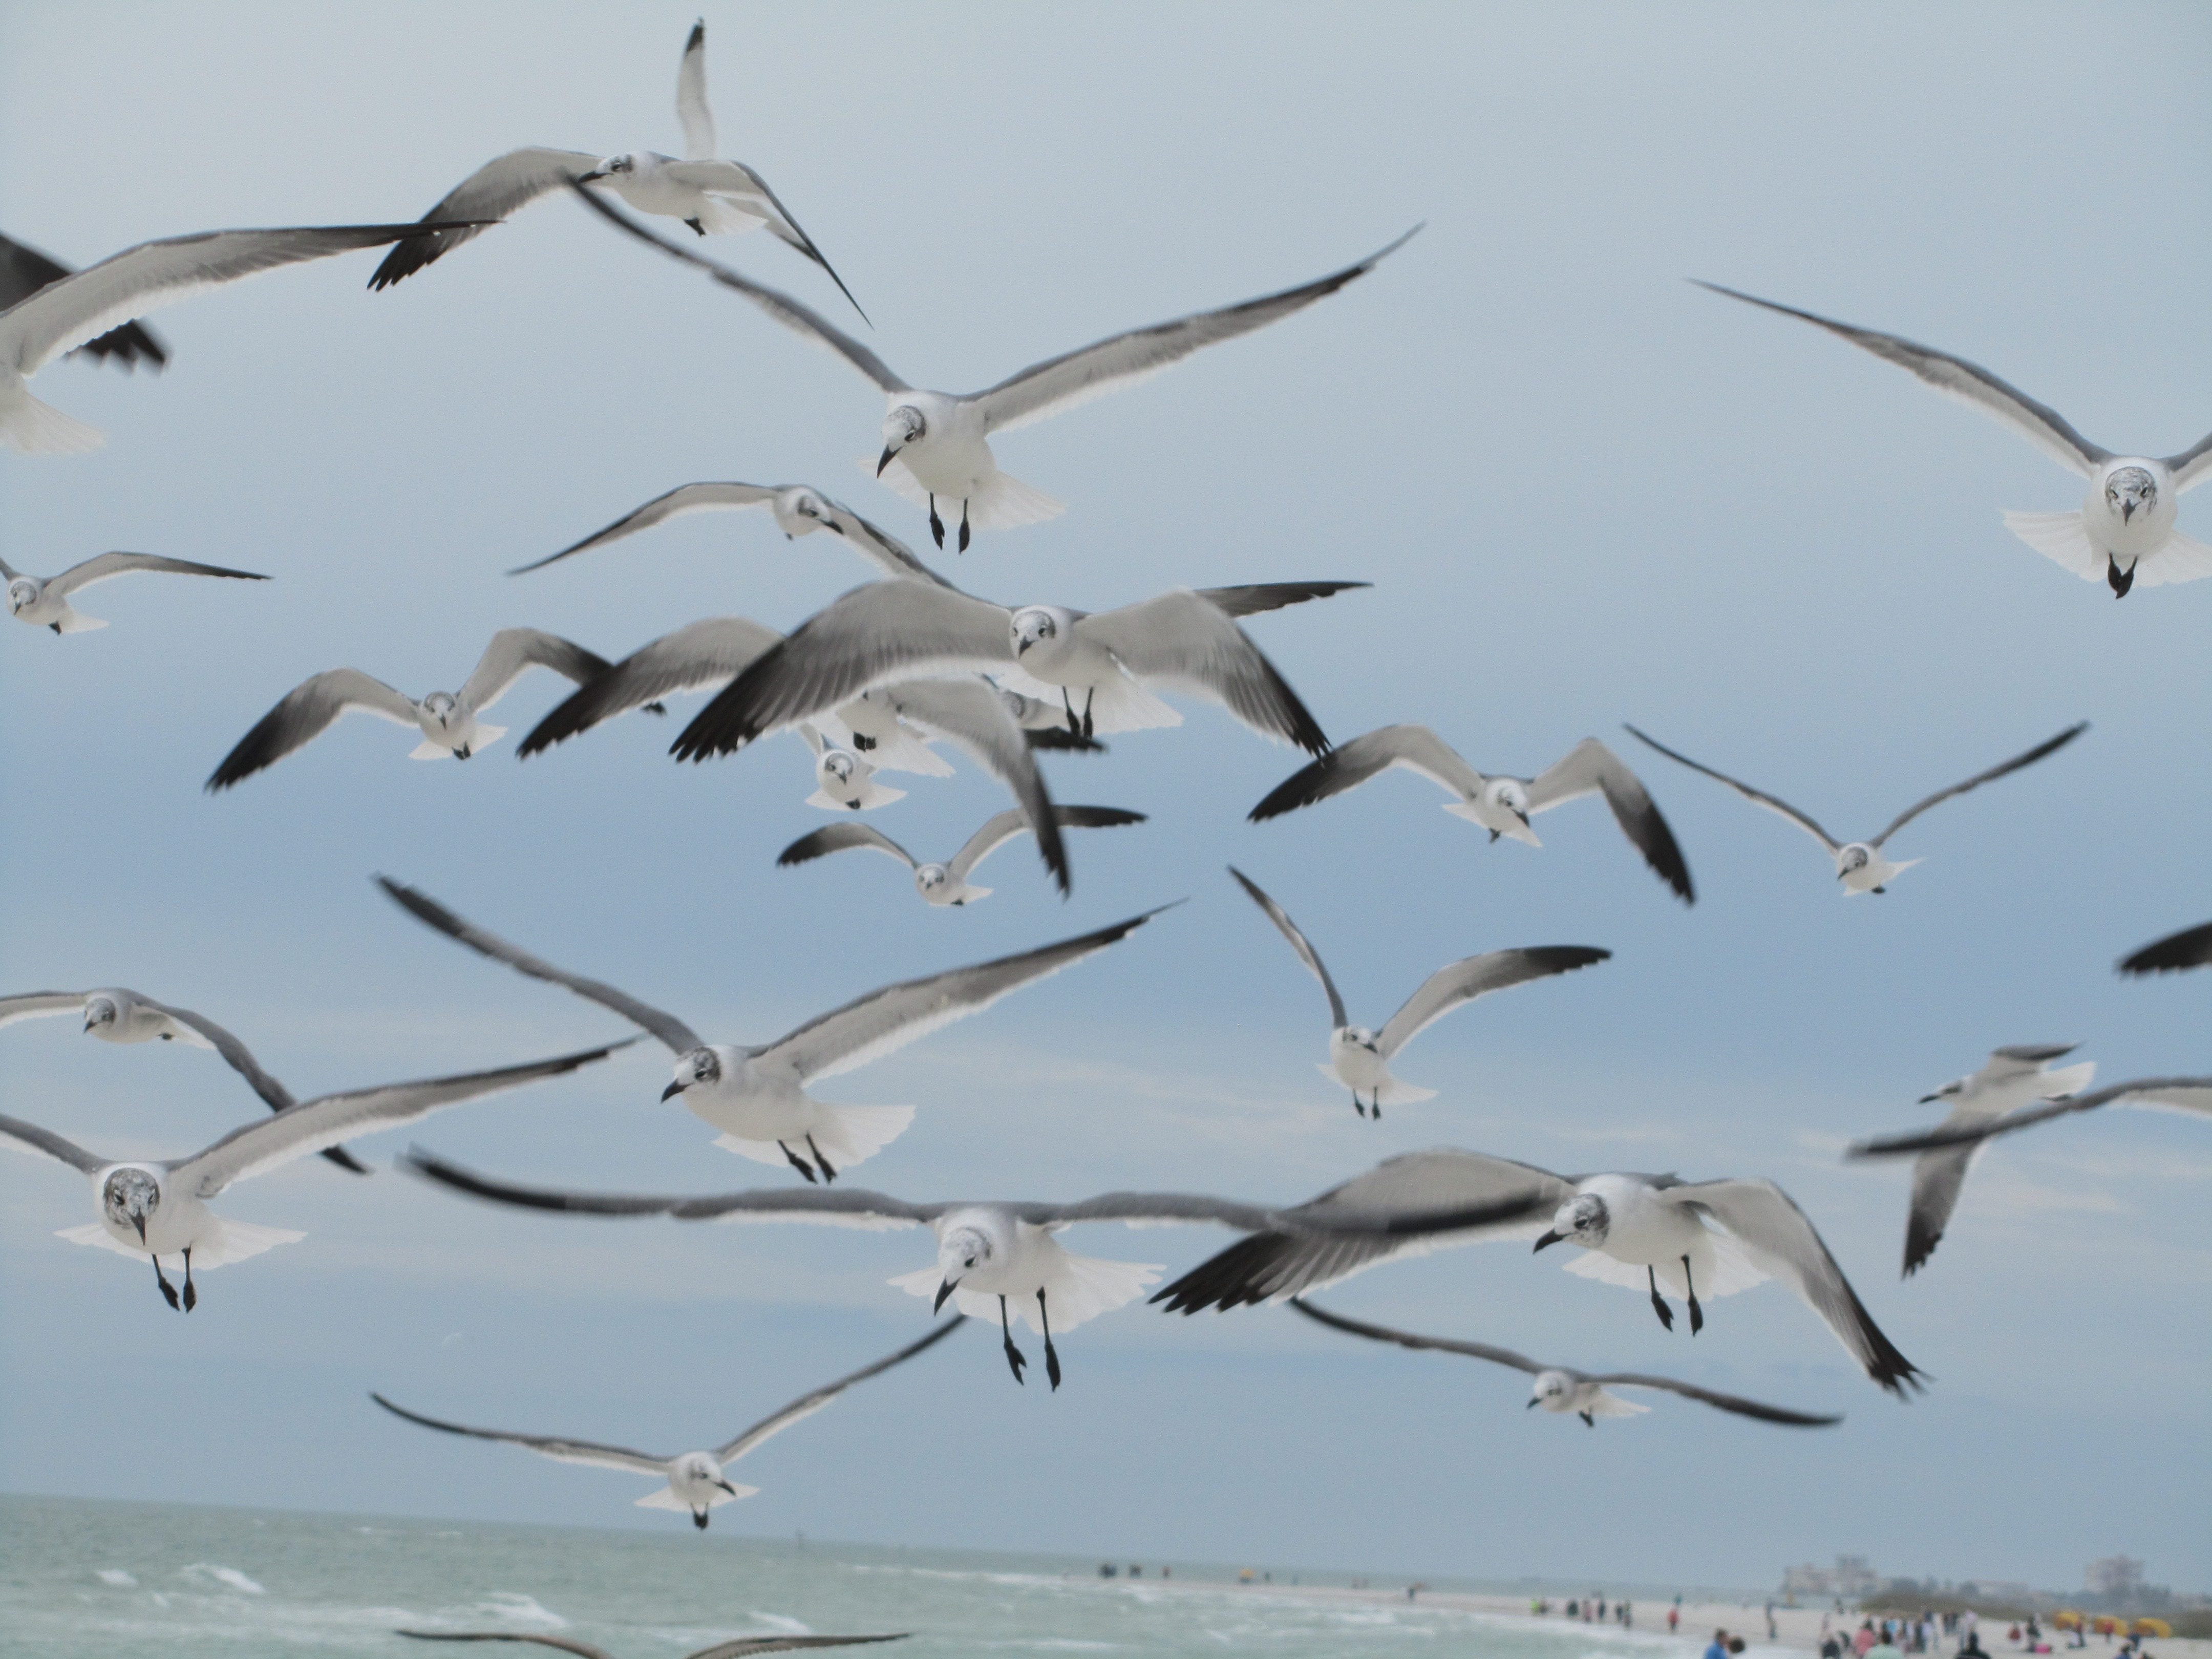 Seagulls, Blue, Birds, Sky, Flying, Grey, bird, flying